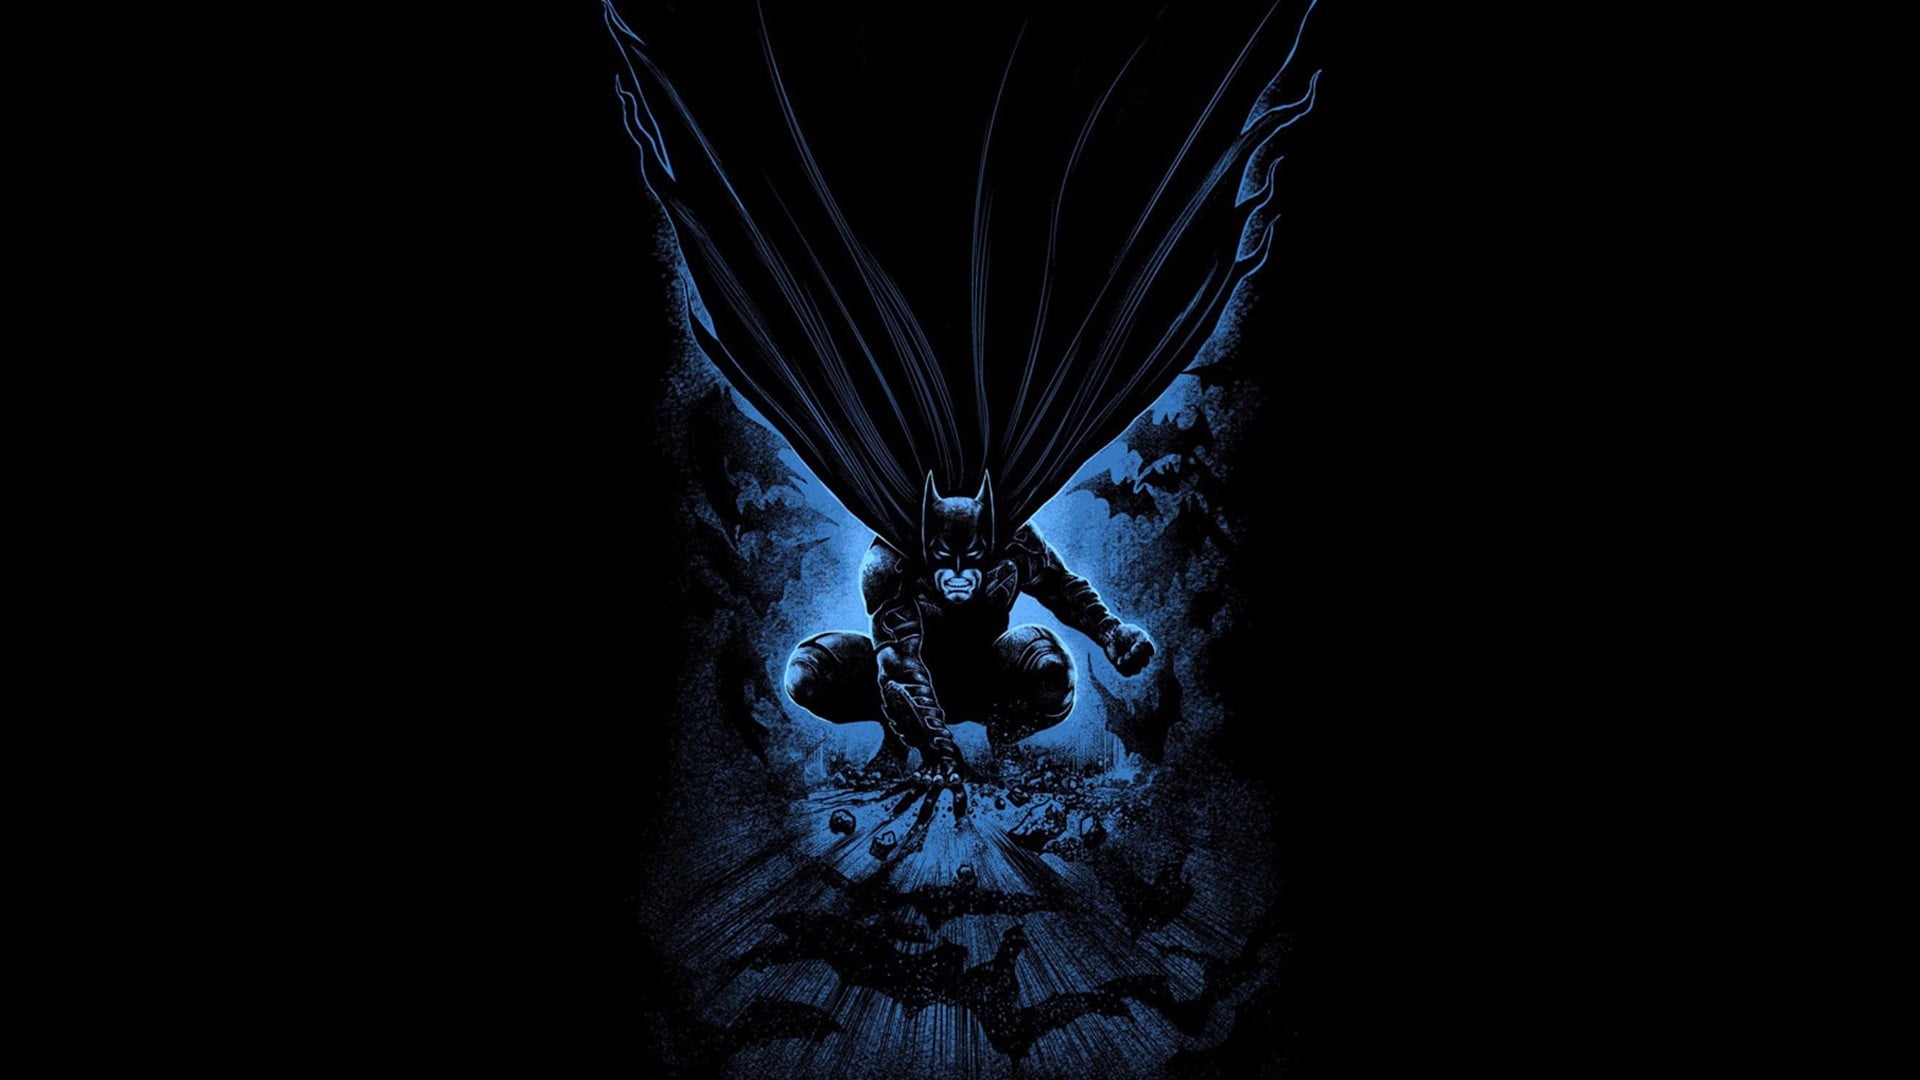 Batman poster, DC Comics, indoors, dark, night, blue, illuminated